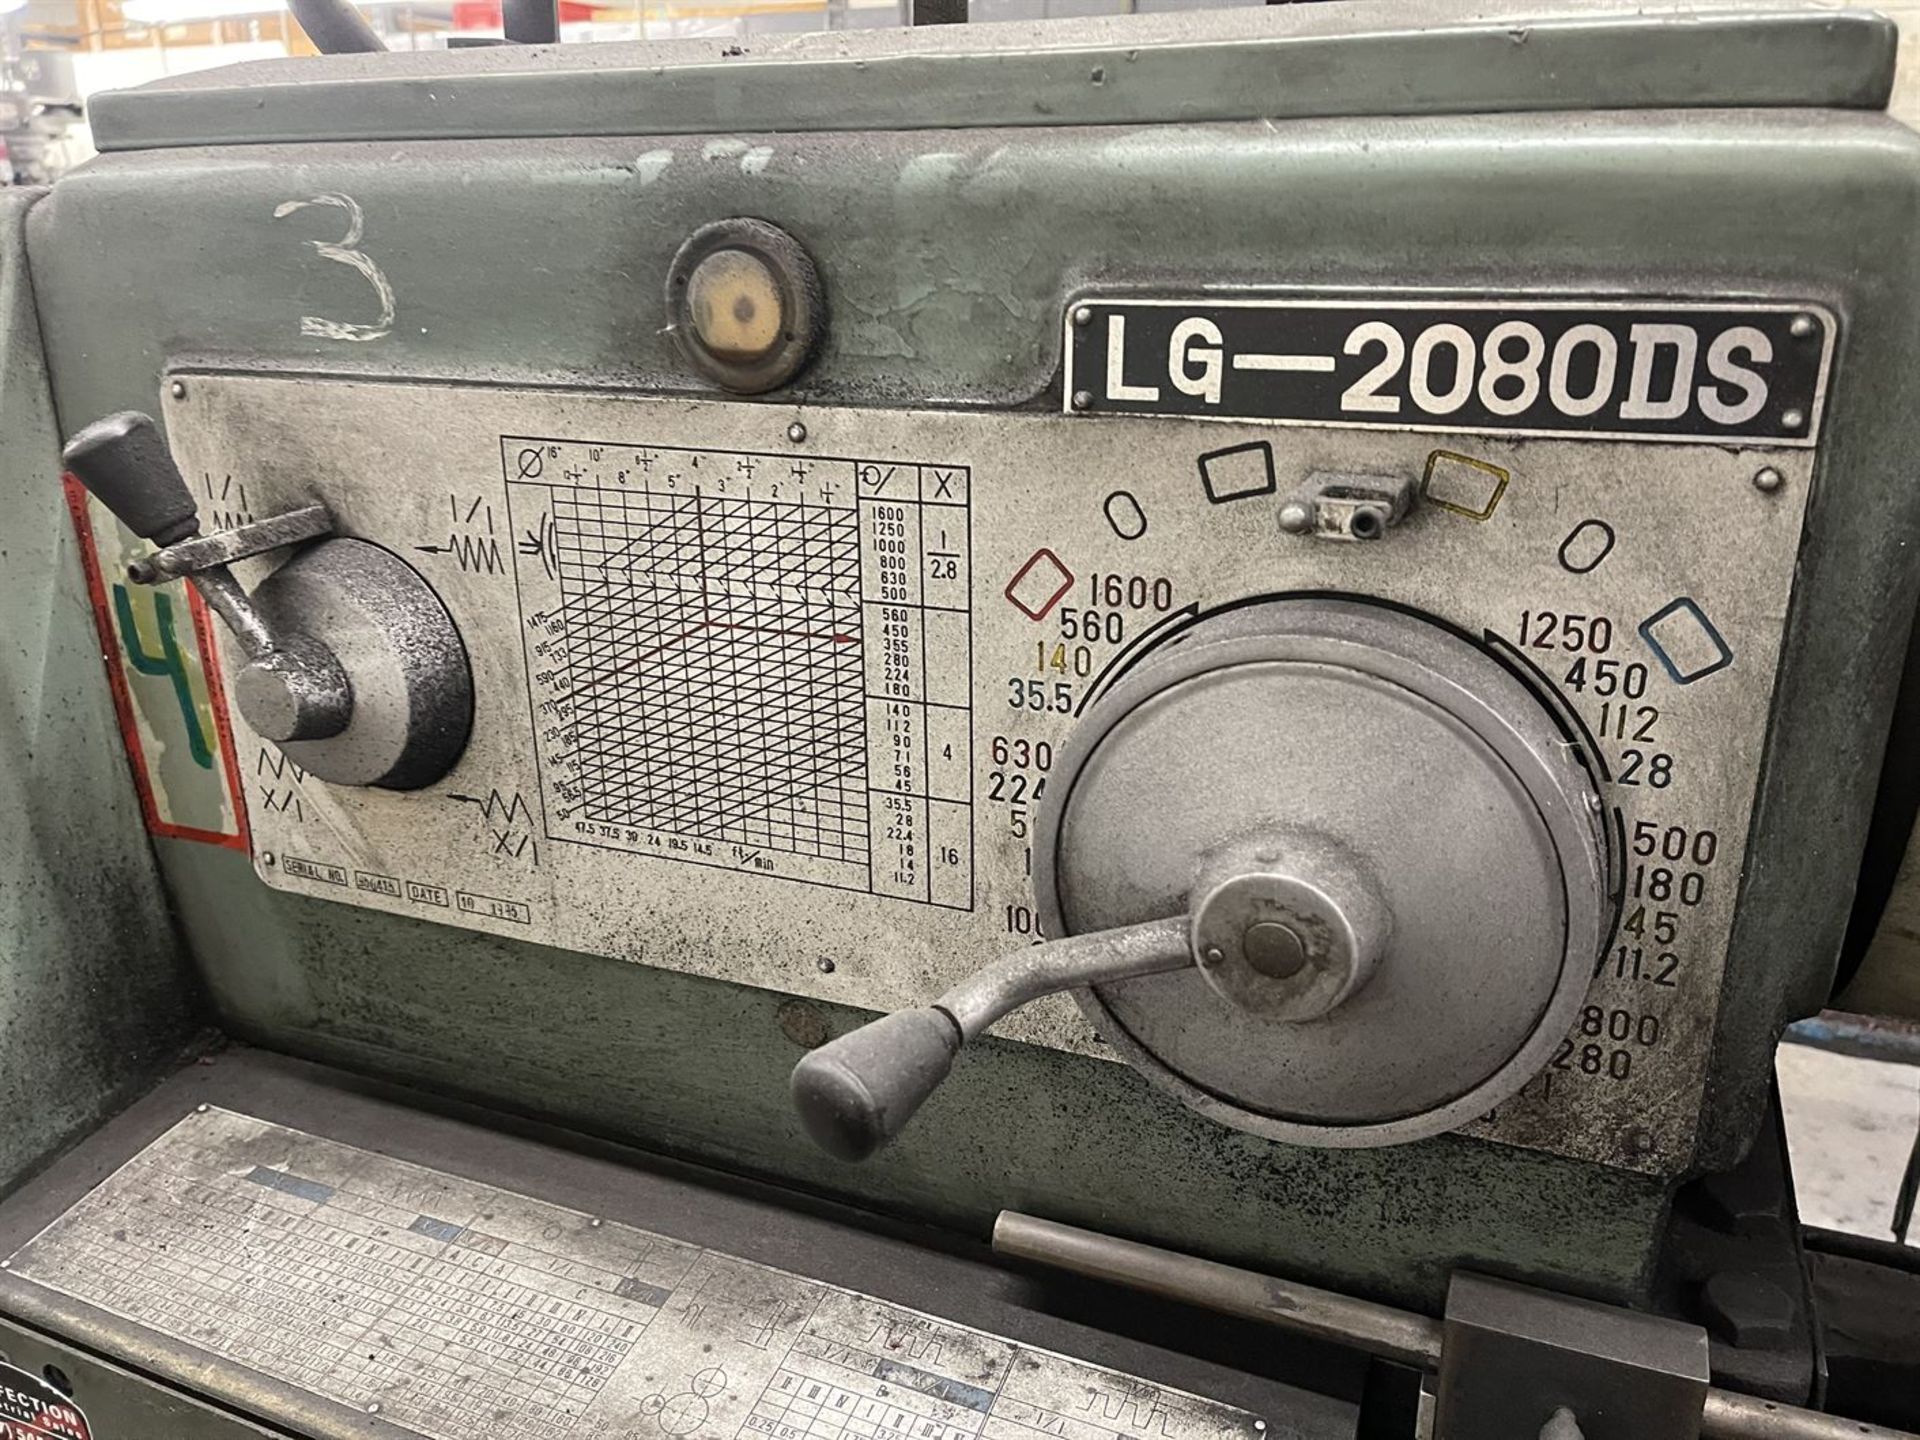 LONGEN LG-2080DS Roll Grinder/Lathe, s/n 95-8-9, 20" Swing, 80" Between Centers, 18-1600 RPM, LAO - Image 4 of 8